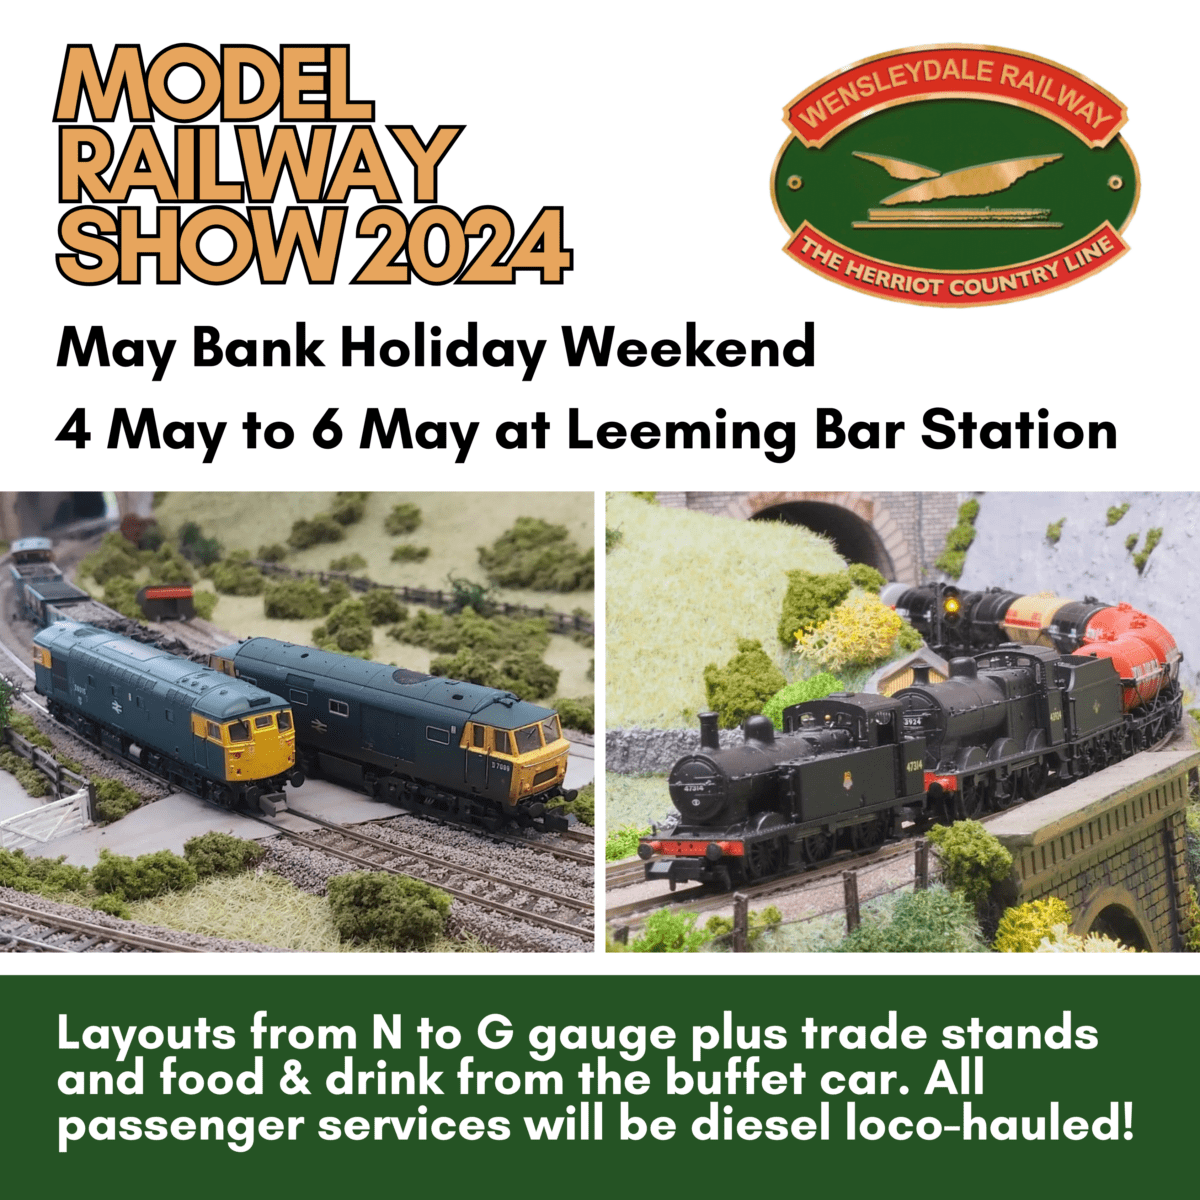 Model Railway Show returns to Wensleydale